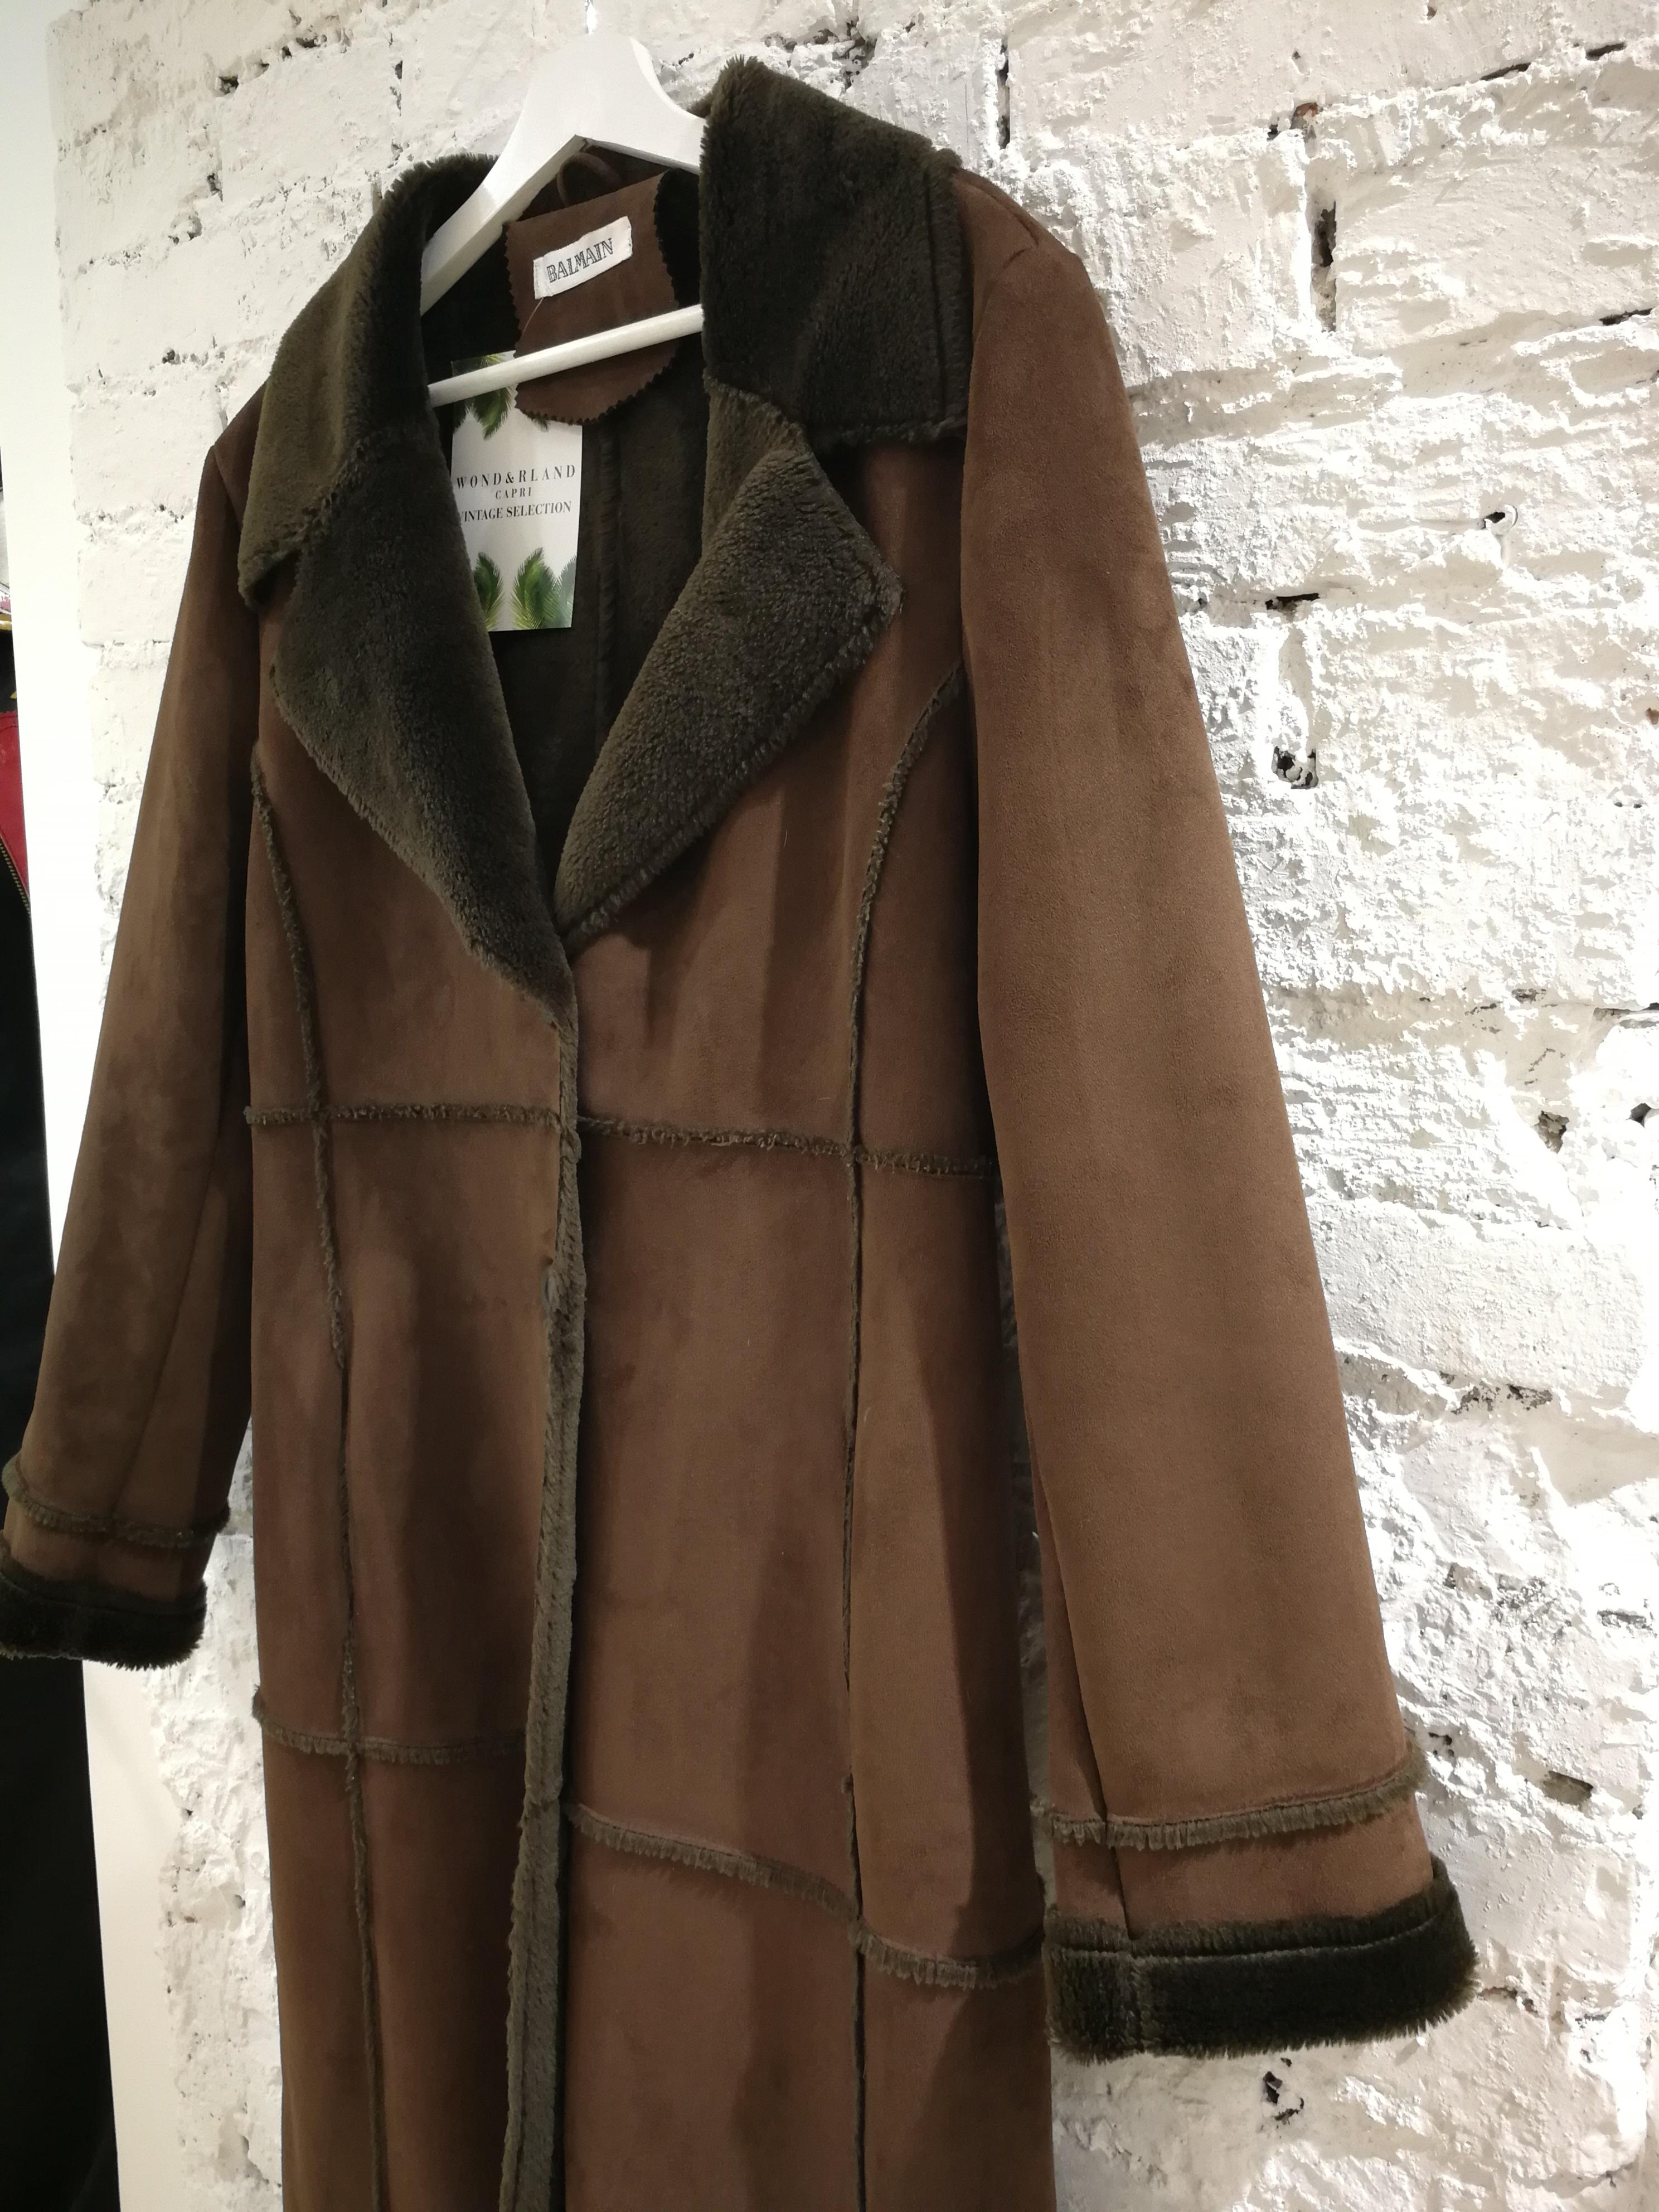 Balmain Long Brown Coat In Excellent Condition For Sale In Capri, IT